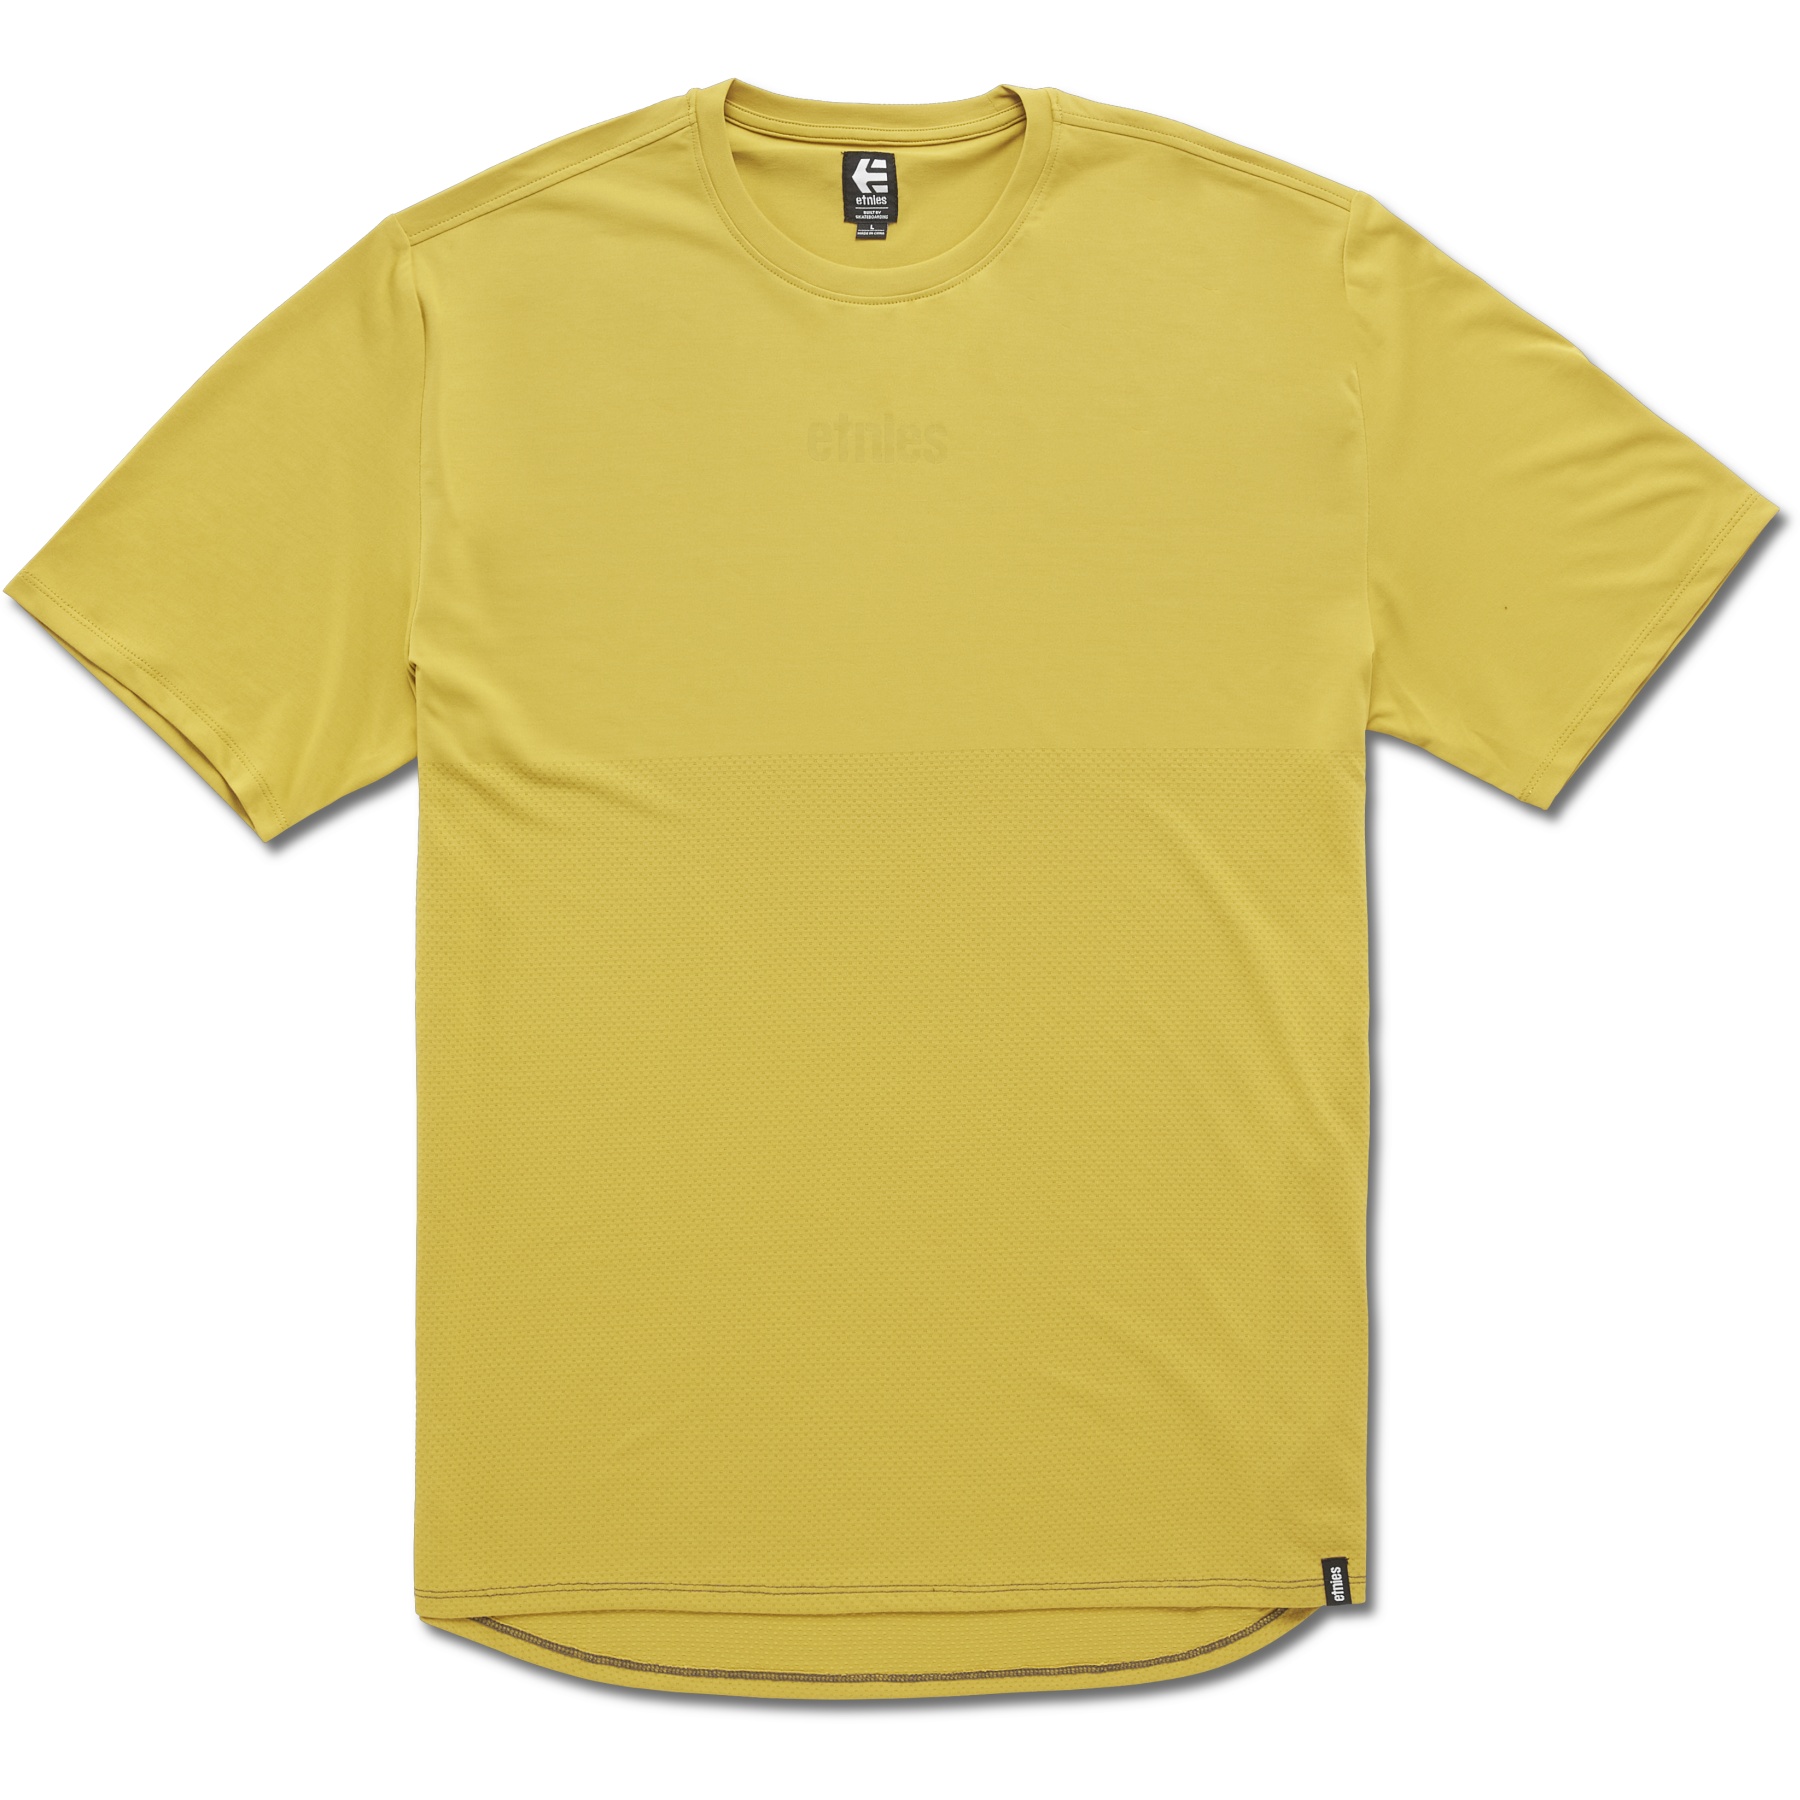 Productfoto van etnies Trailblazer Fietsshirt - acid yellow